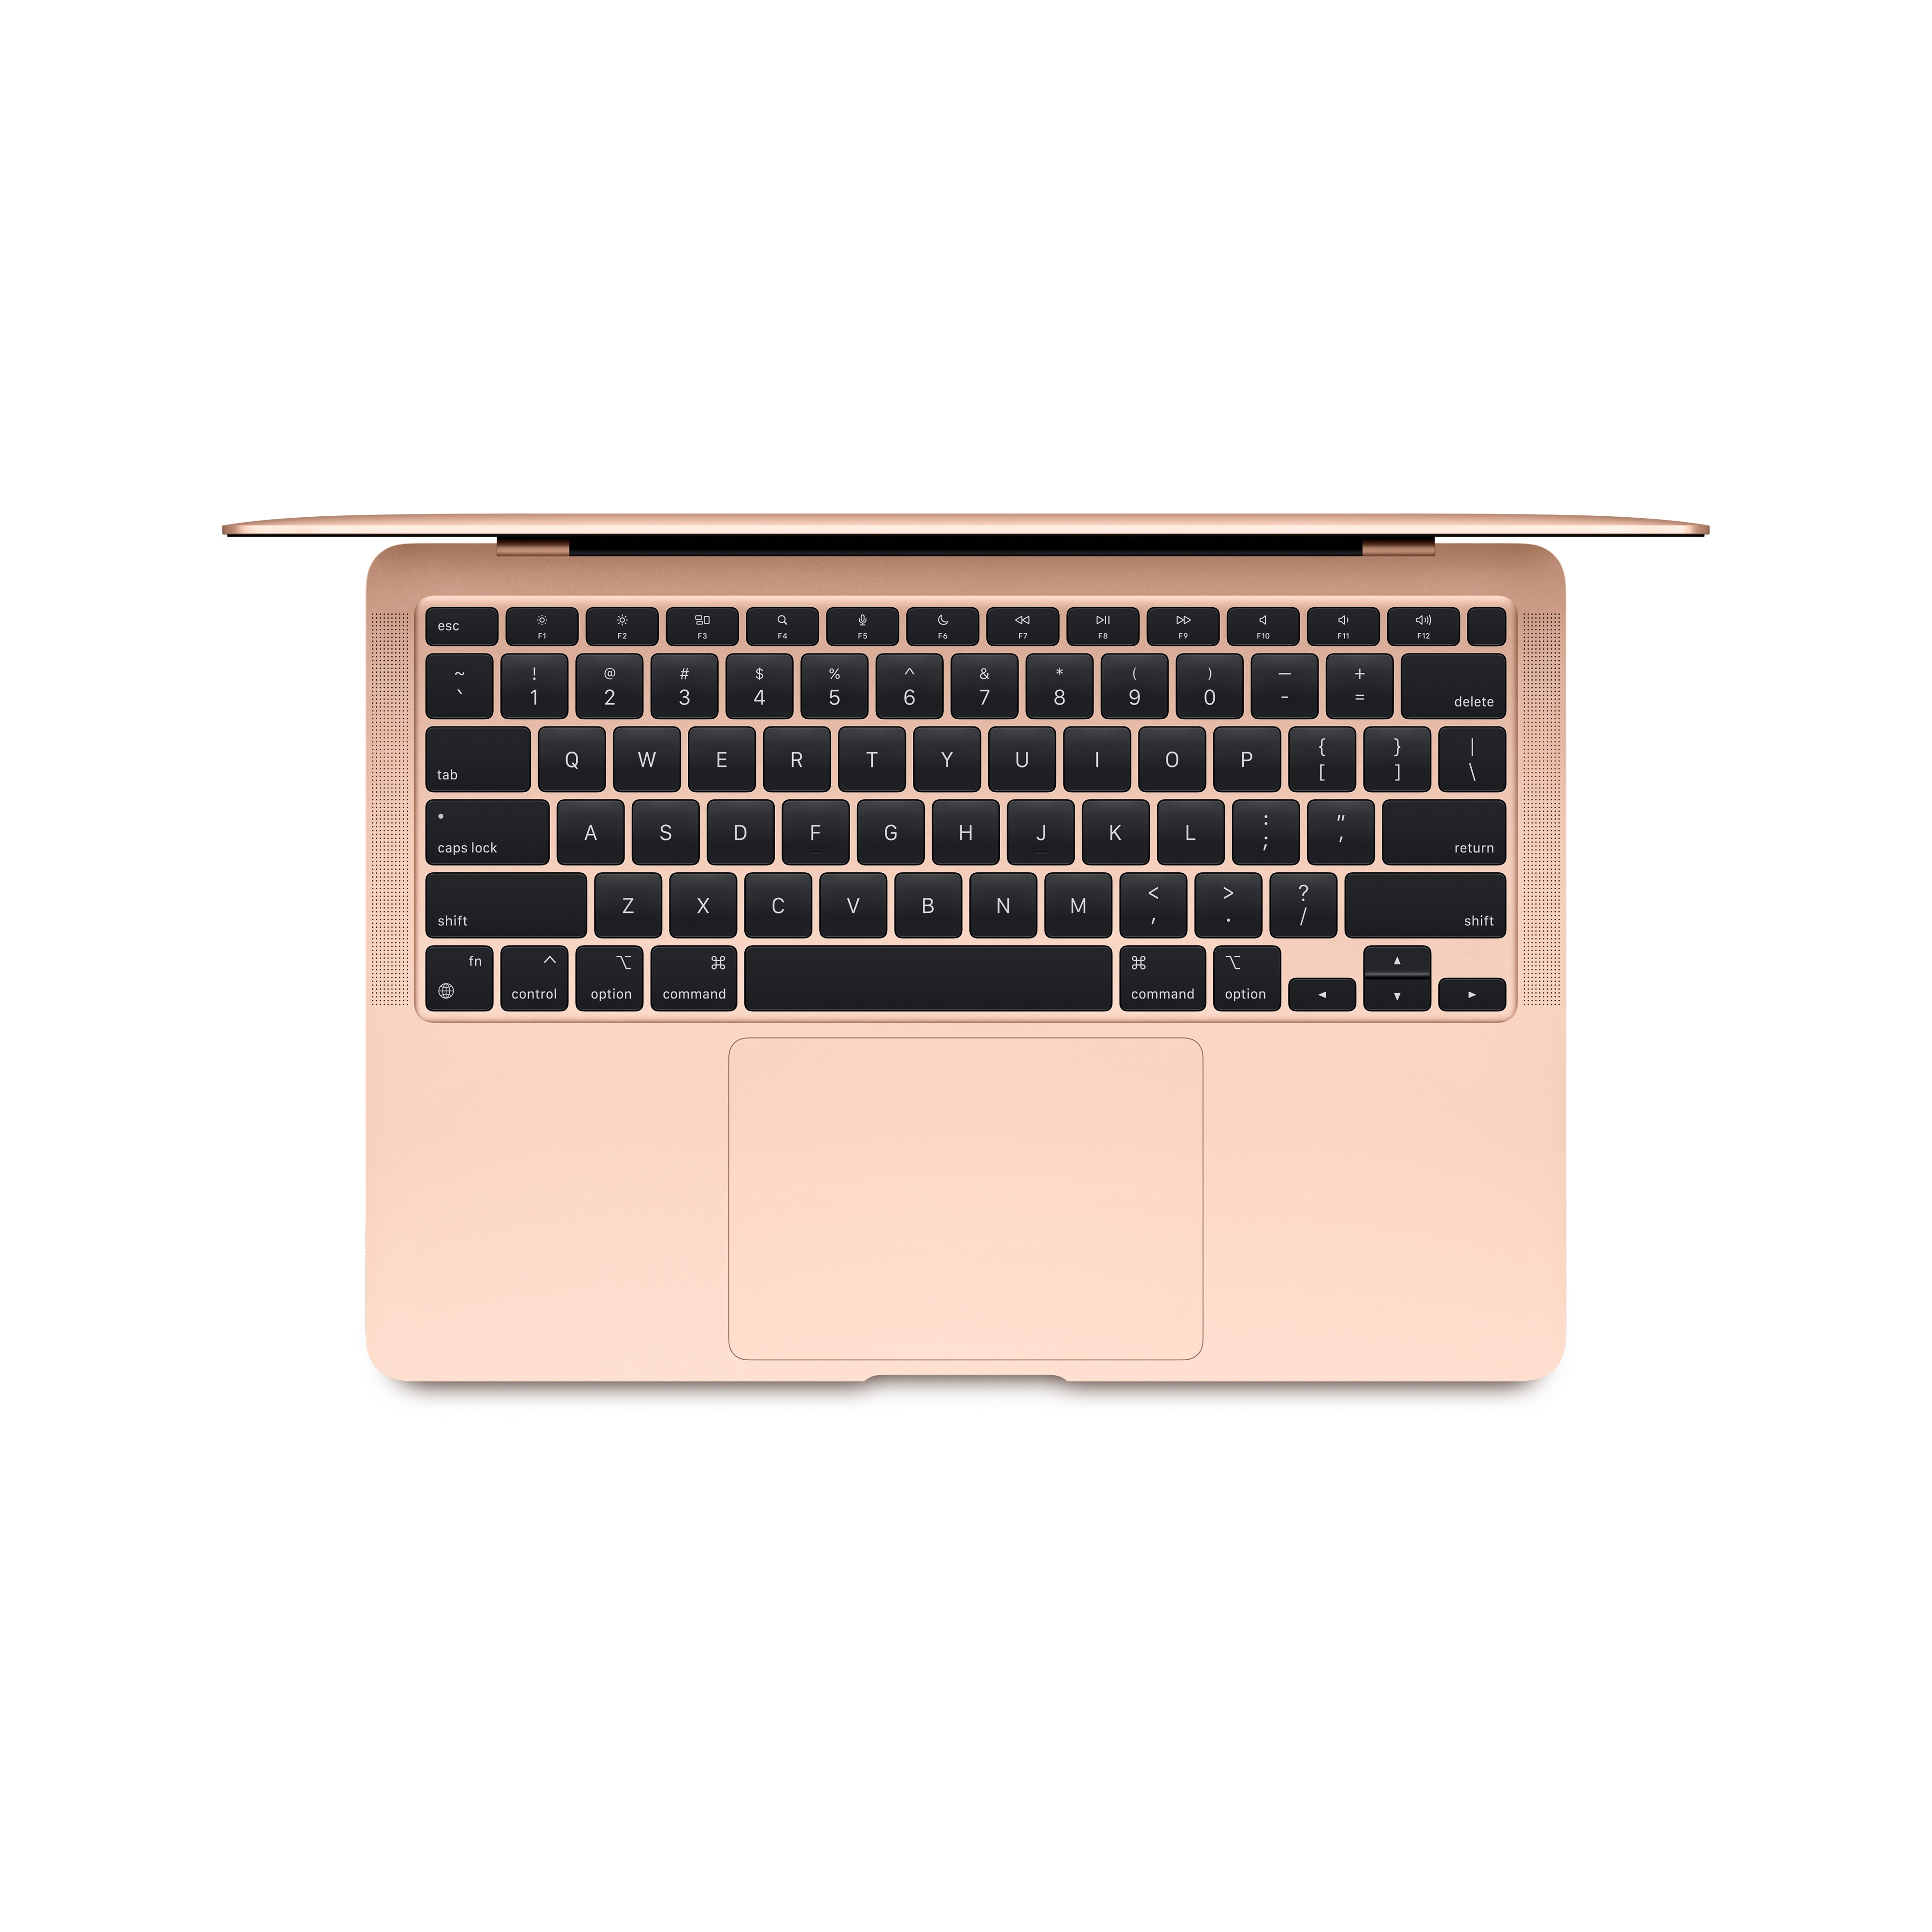 MacBook Air 13.3 Laptop - Apple M1 chip - 8GB Memory - 256GB SSD - Gold